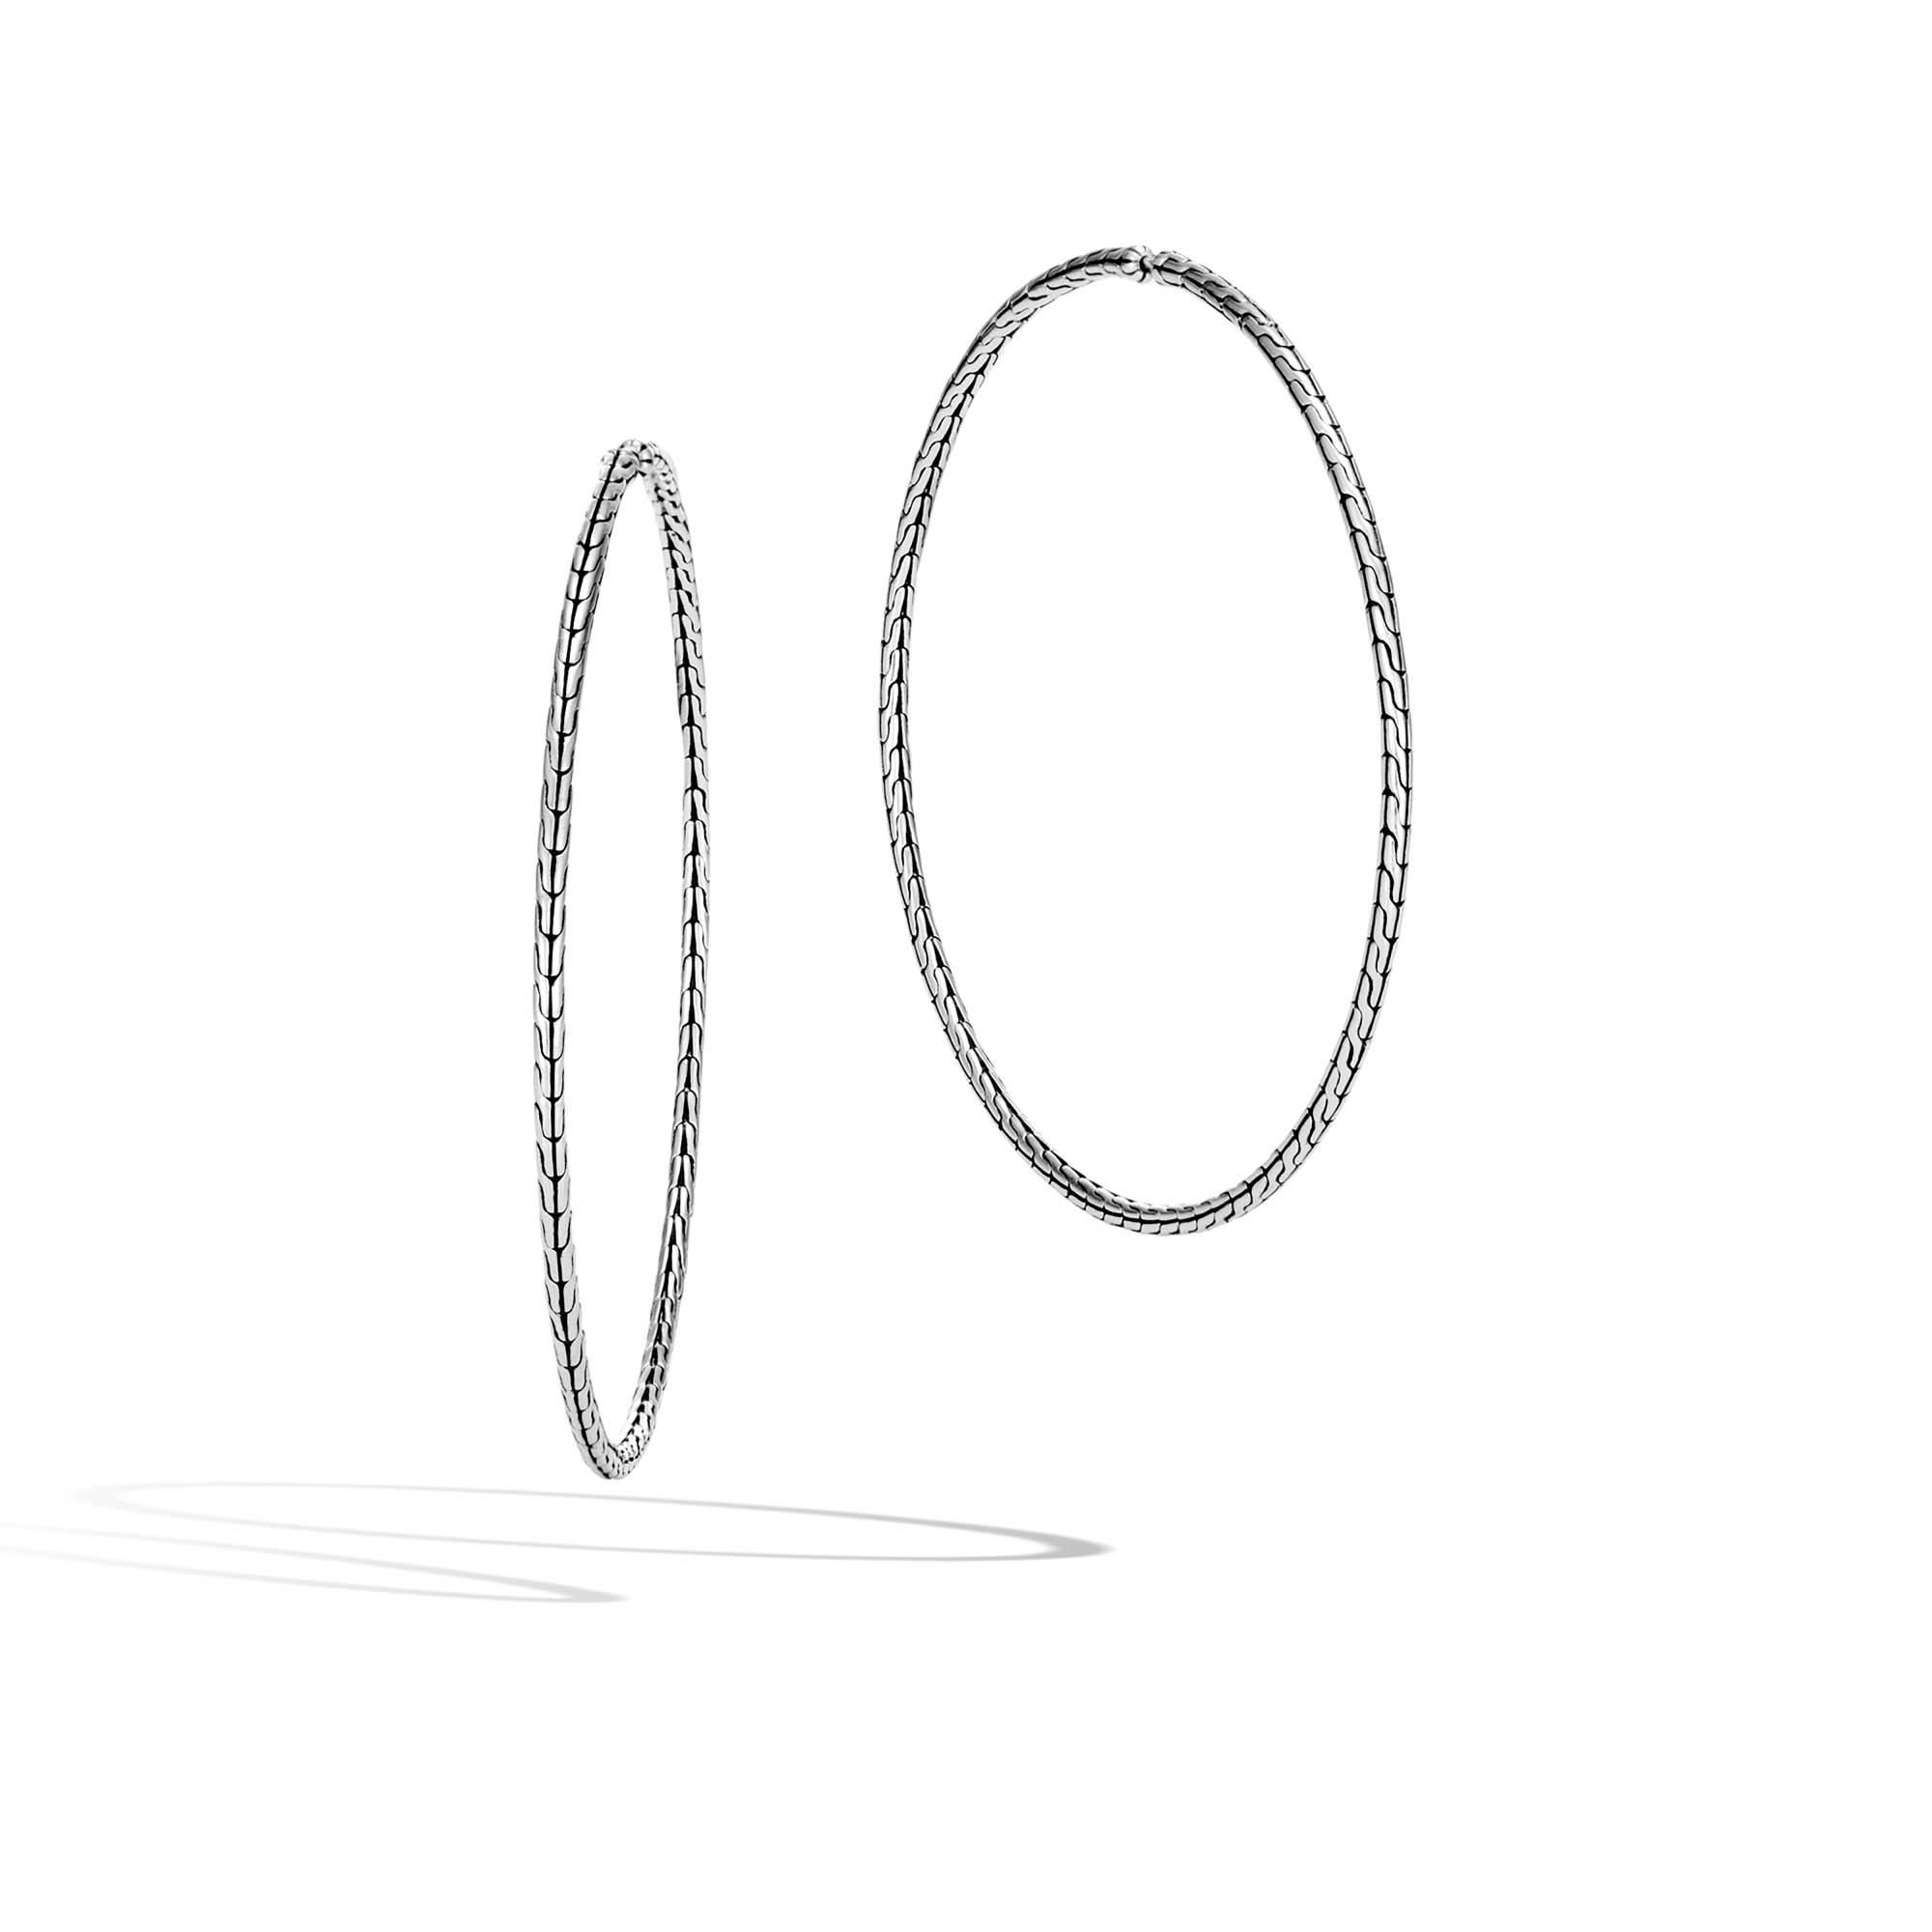 442552Classic-Chain-Silver-Extra-Large-Hoop-Earrings.jpg